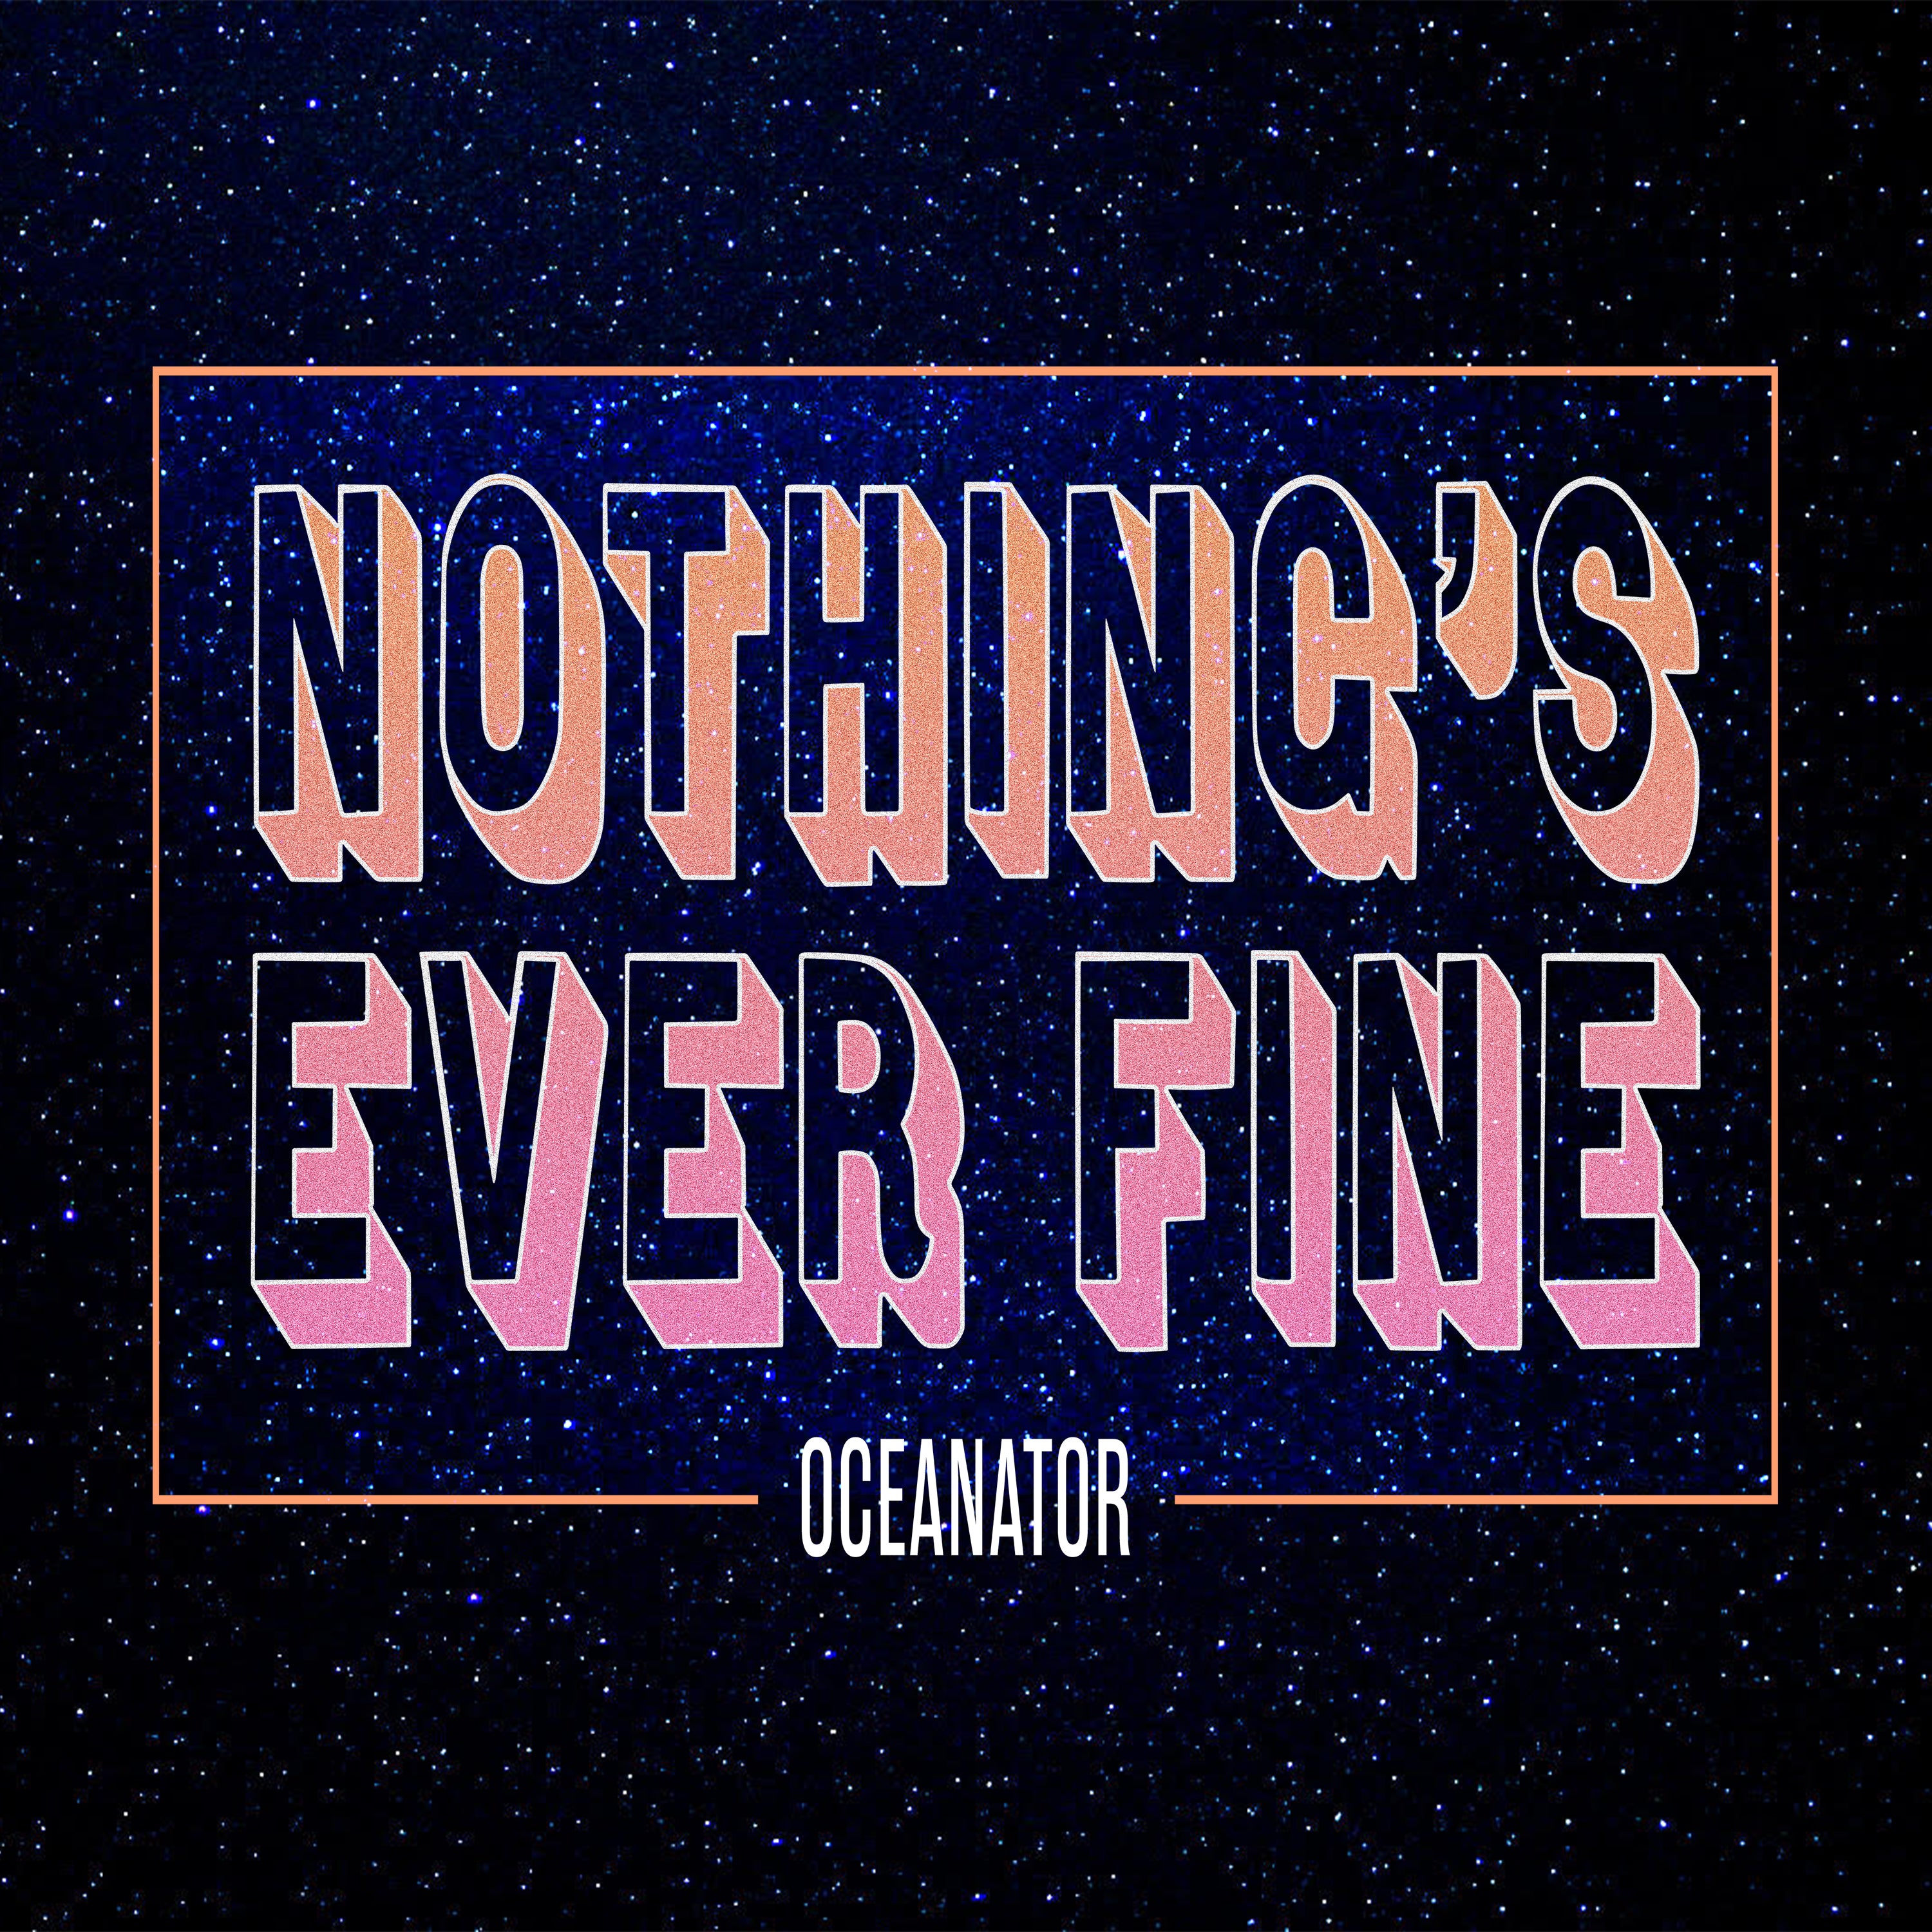 Oceanator - Nothing’s Ever Fine